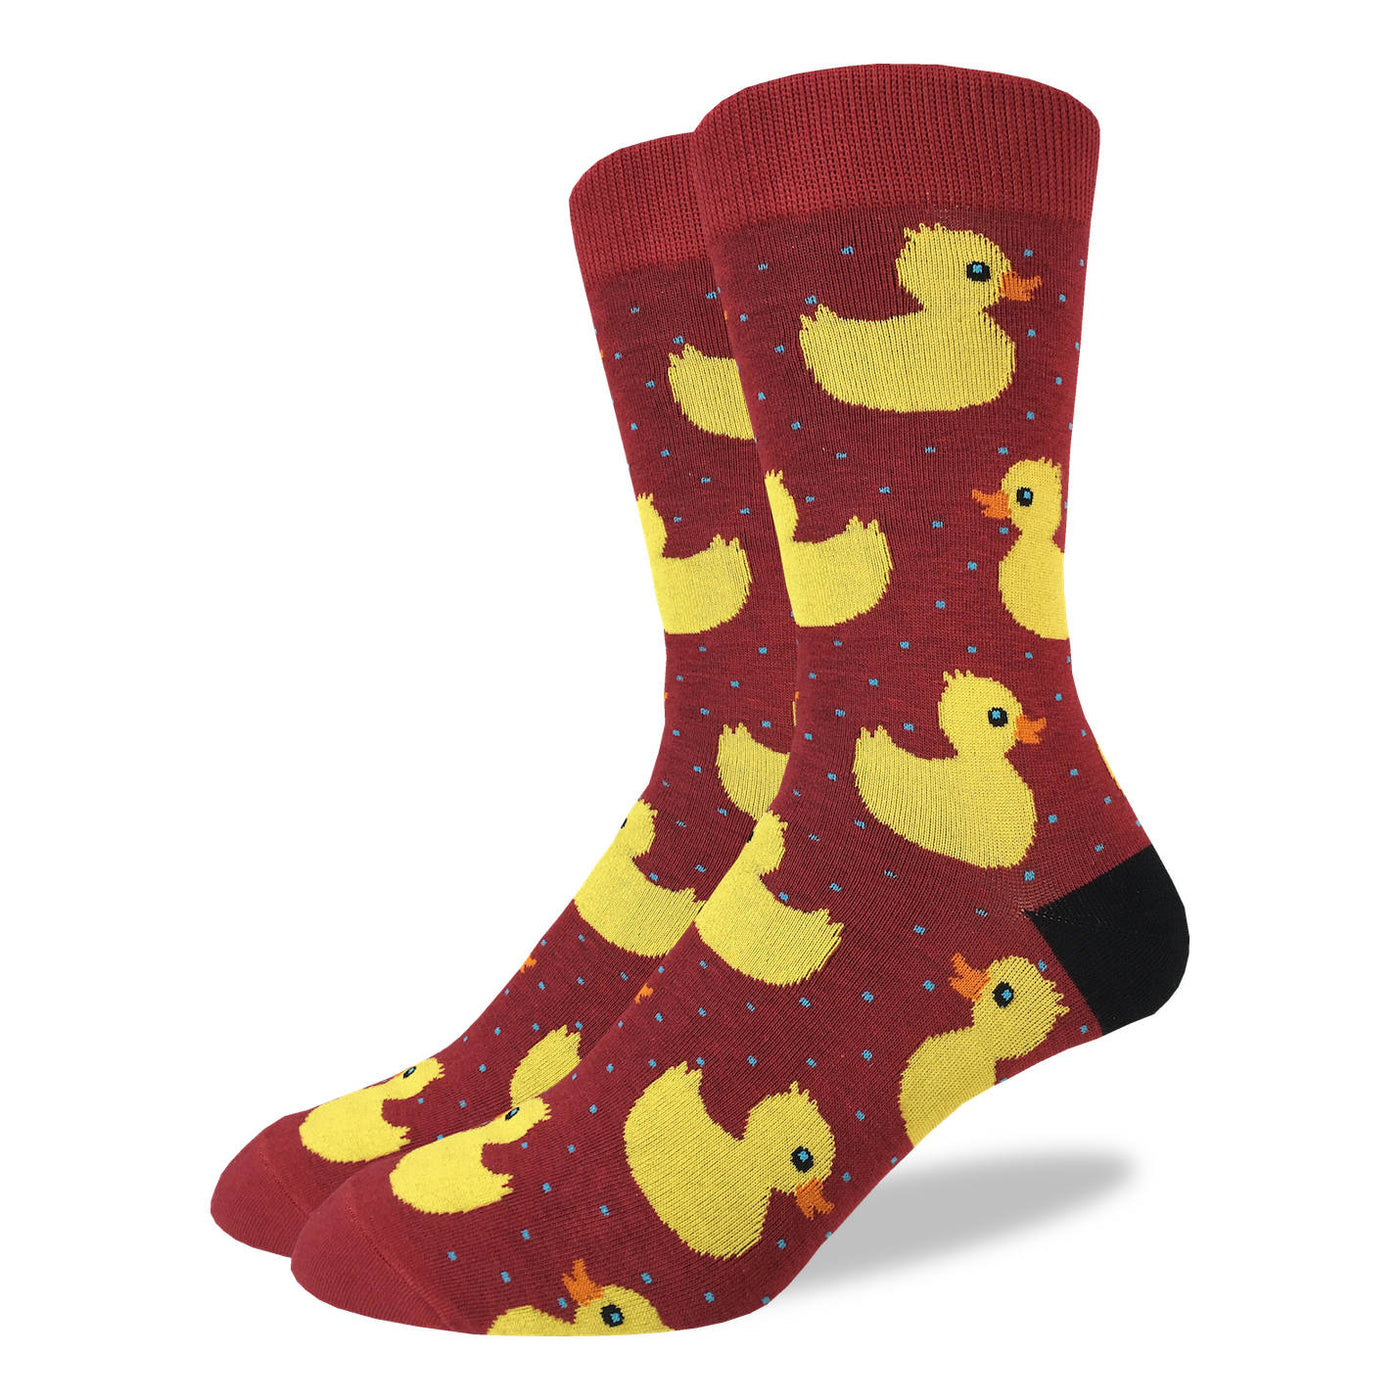 "Rubber Ducks" Cotton Crew Socks by Good Luck Sock